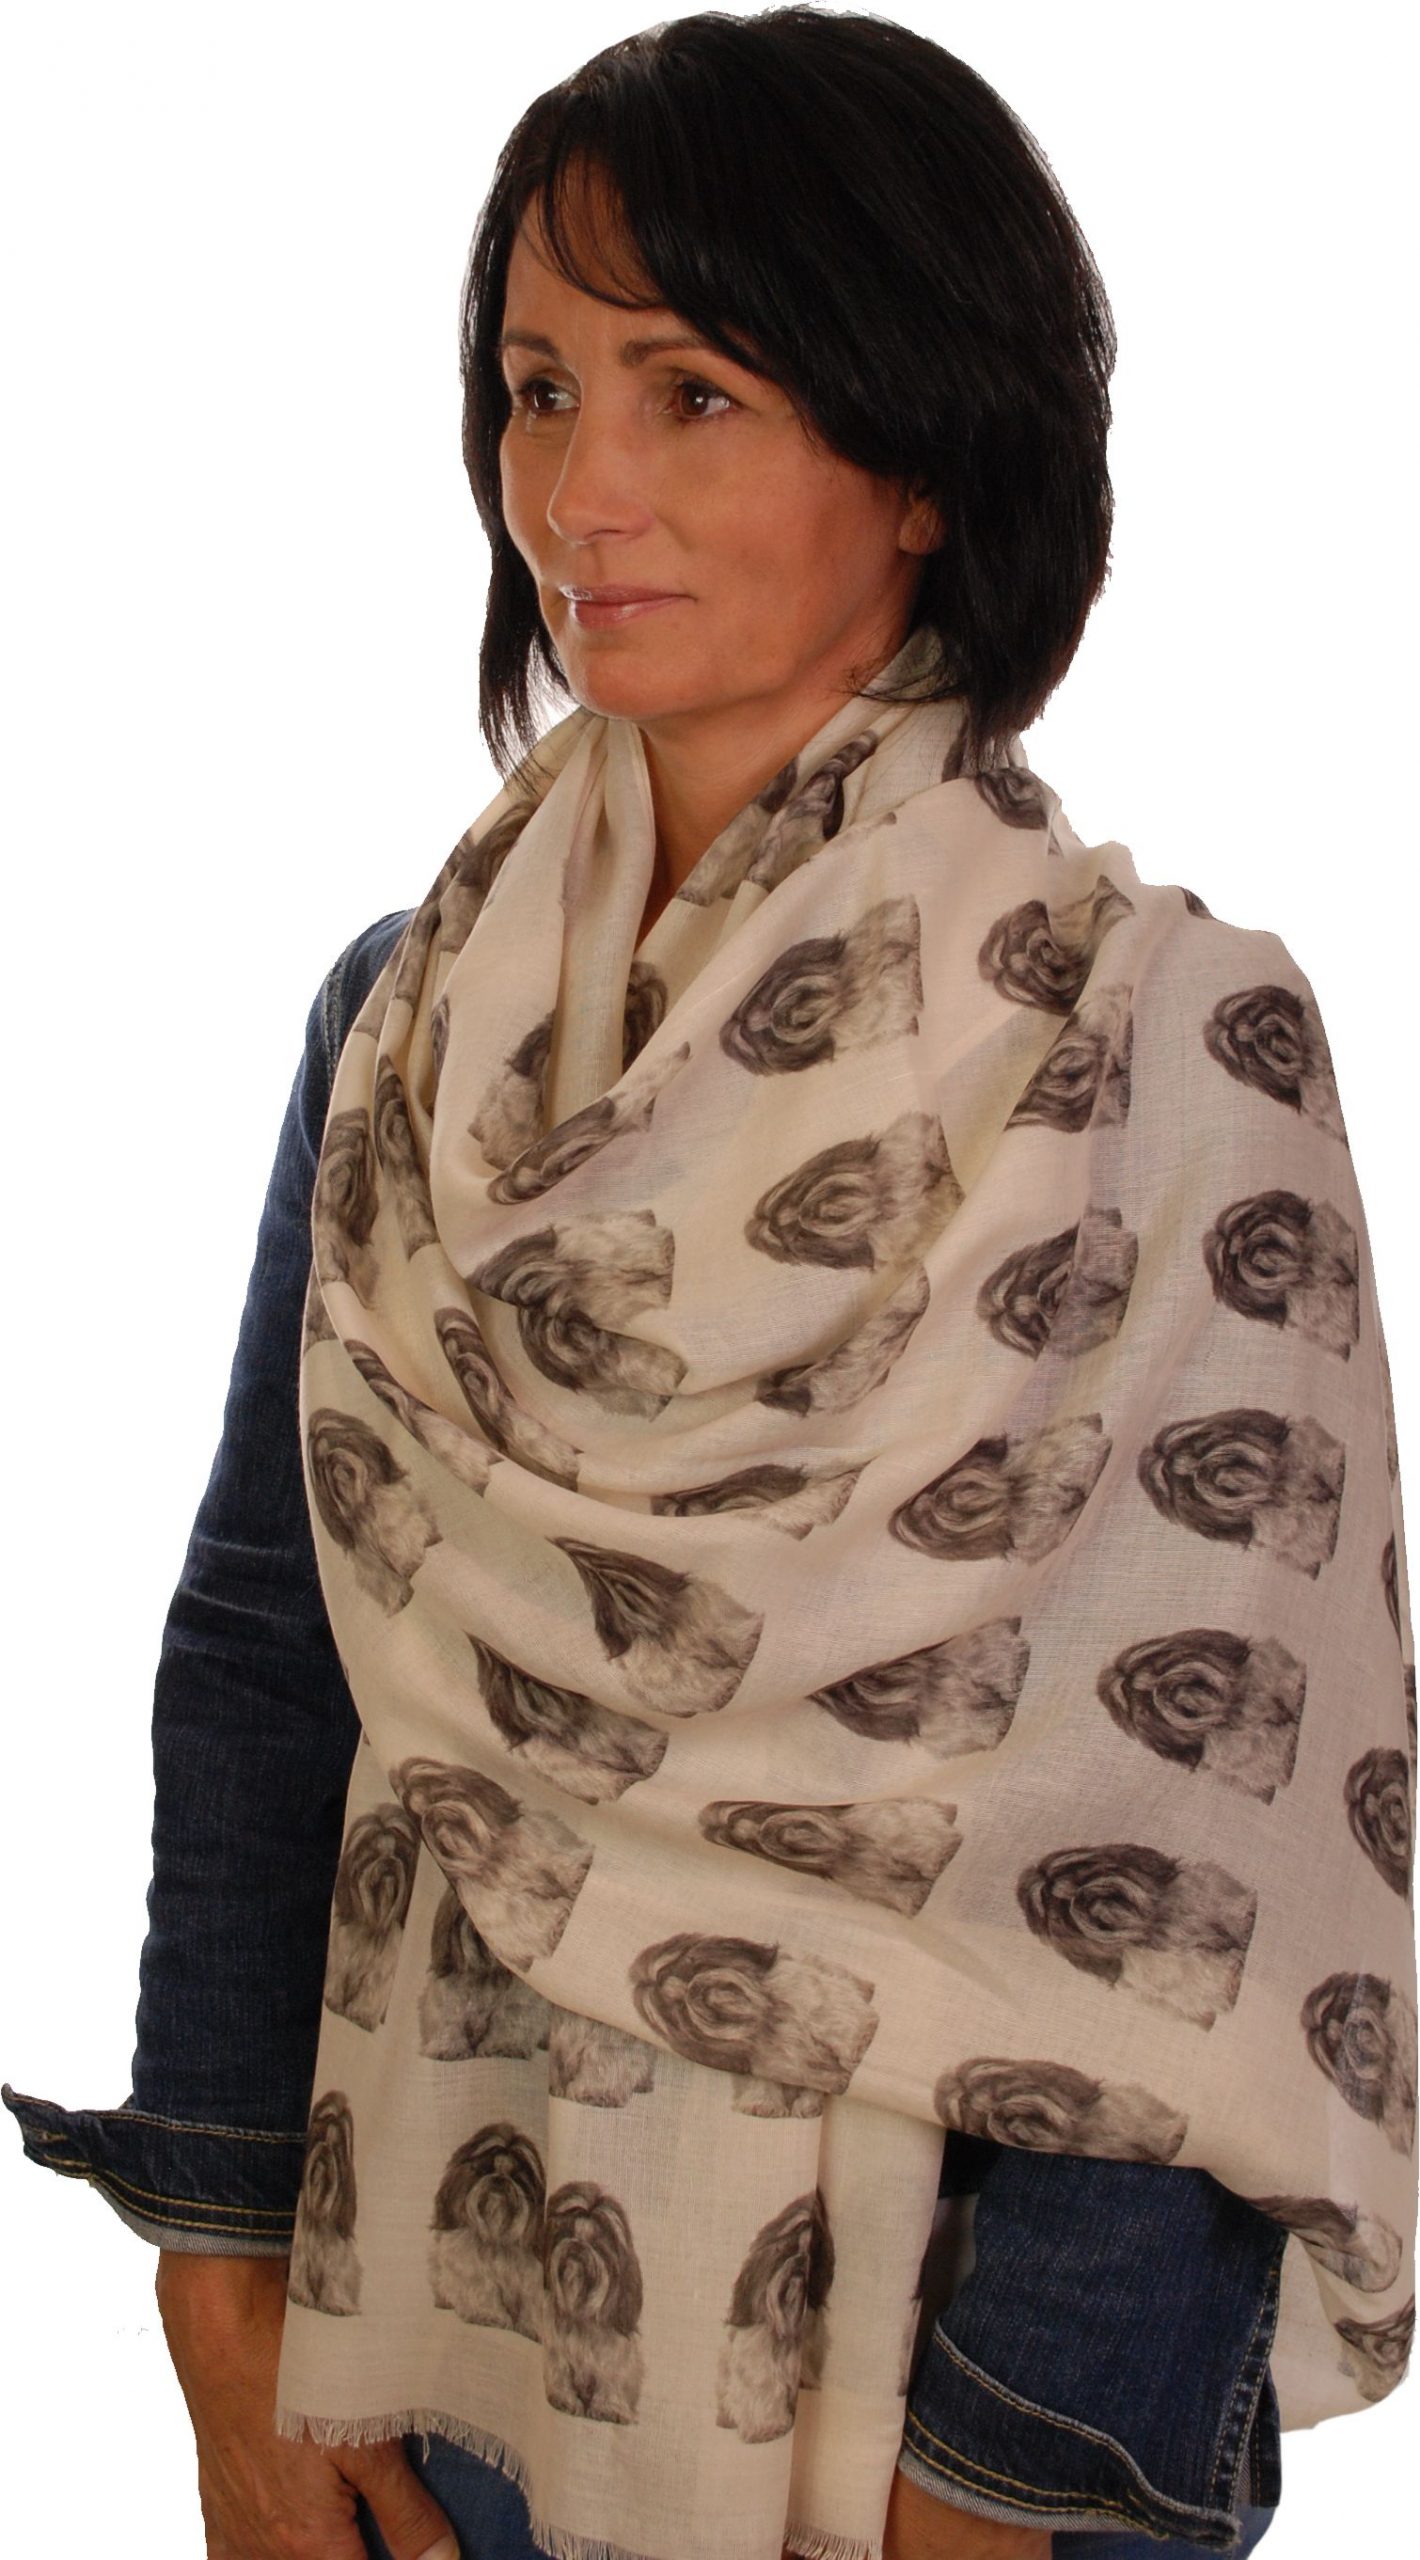 Mike Sibley Shih Tzu licensed design ladies fashion scarf